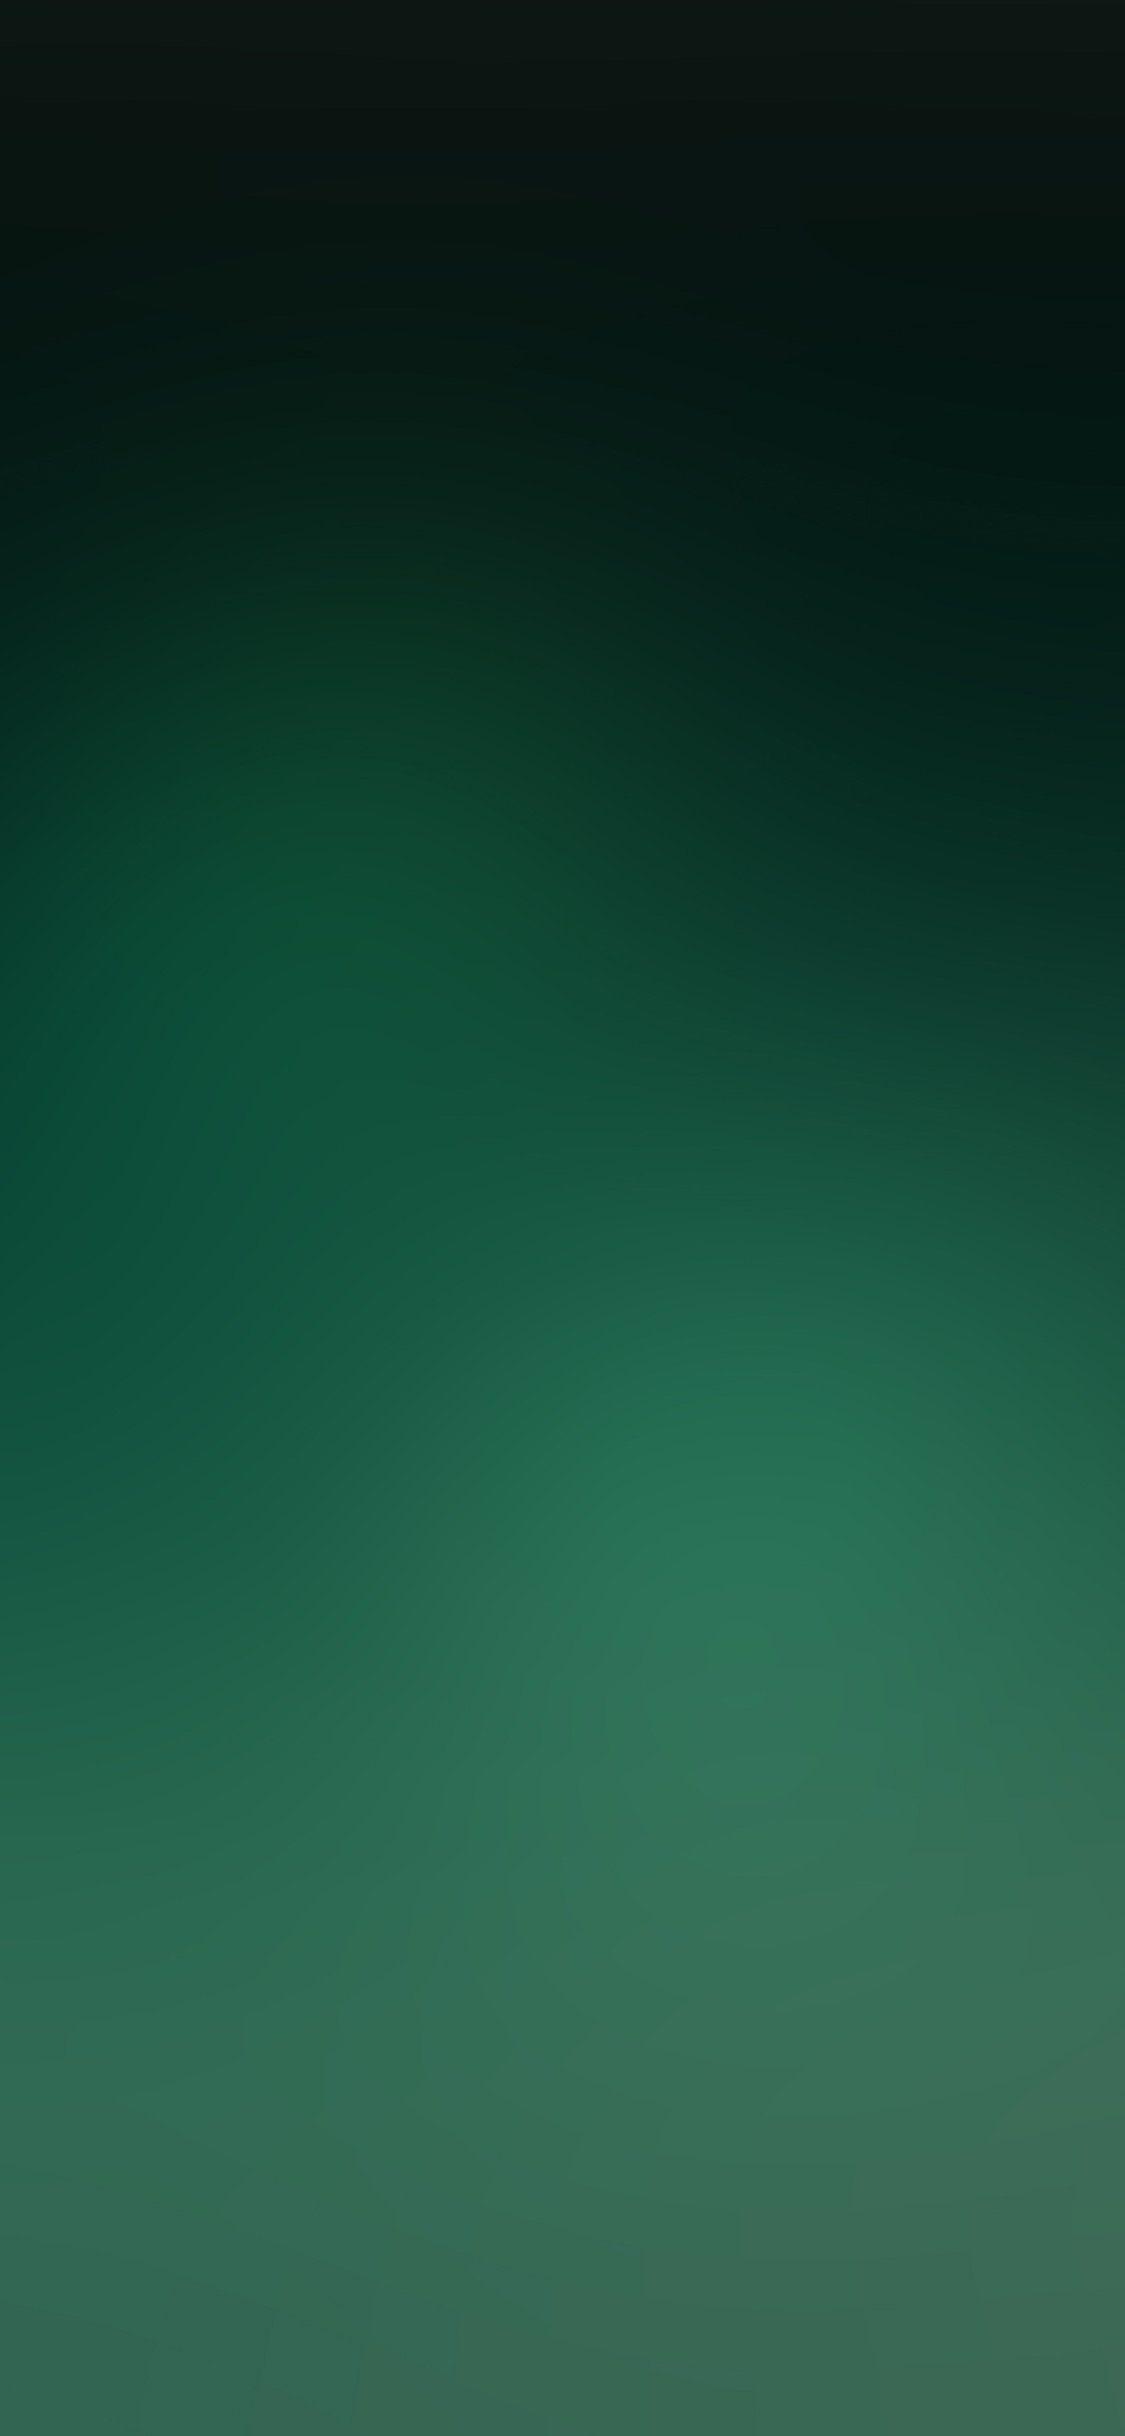 iPhone X wallpaper. green space blur